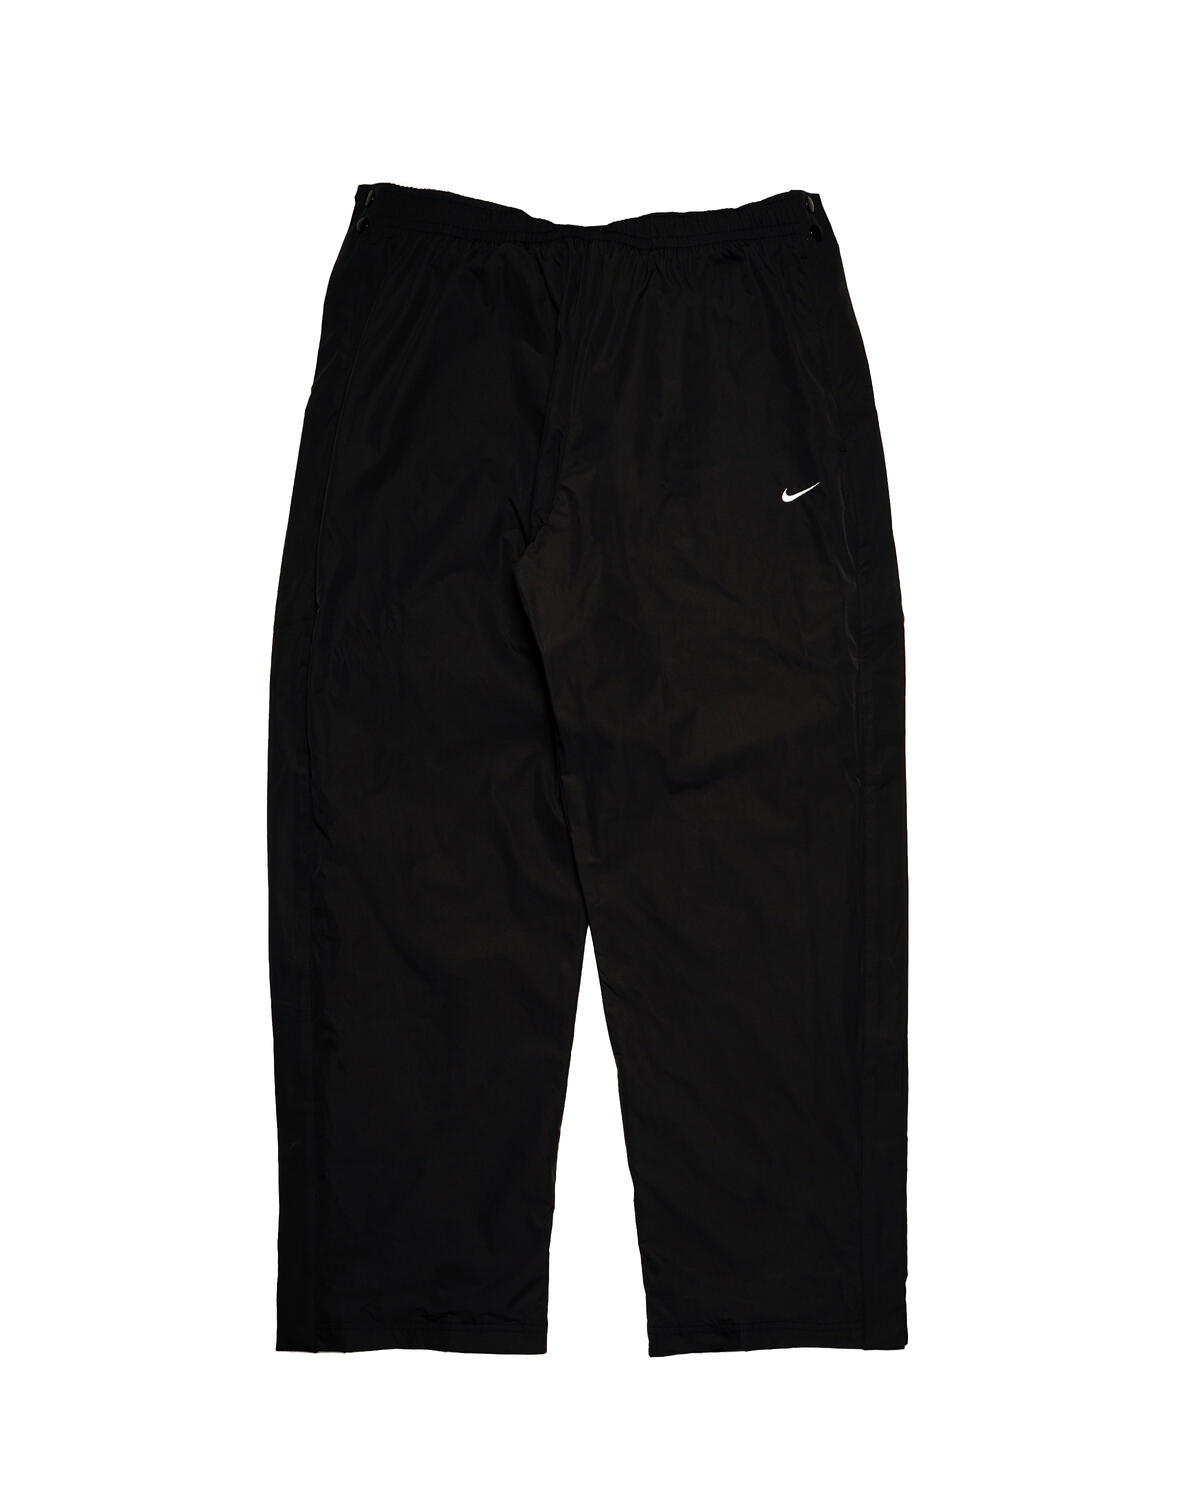 Sweatpants Nike Authentics Tearaway Pant DX3334-247